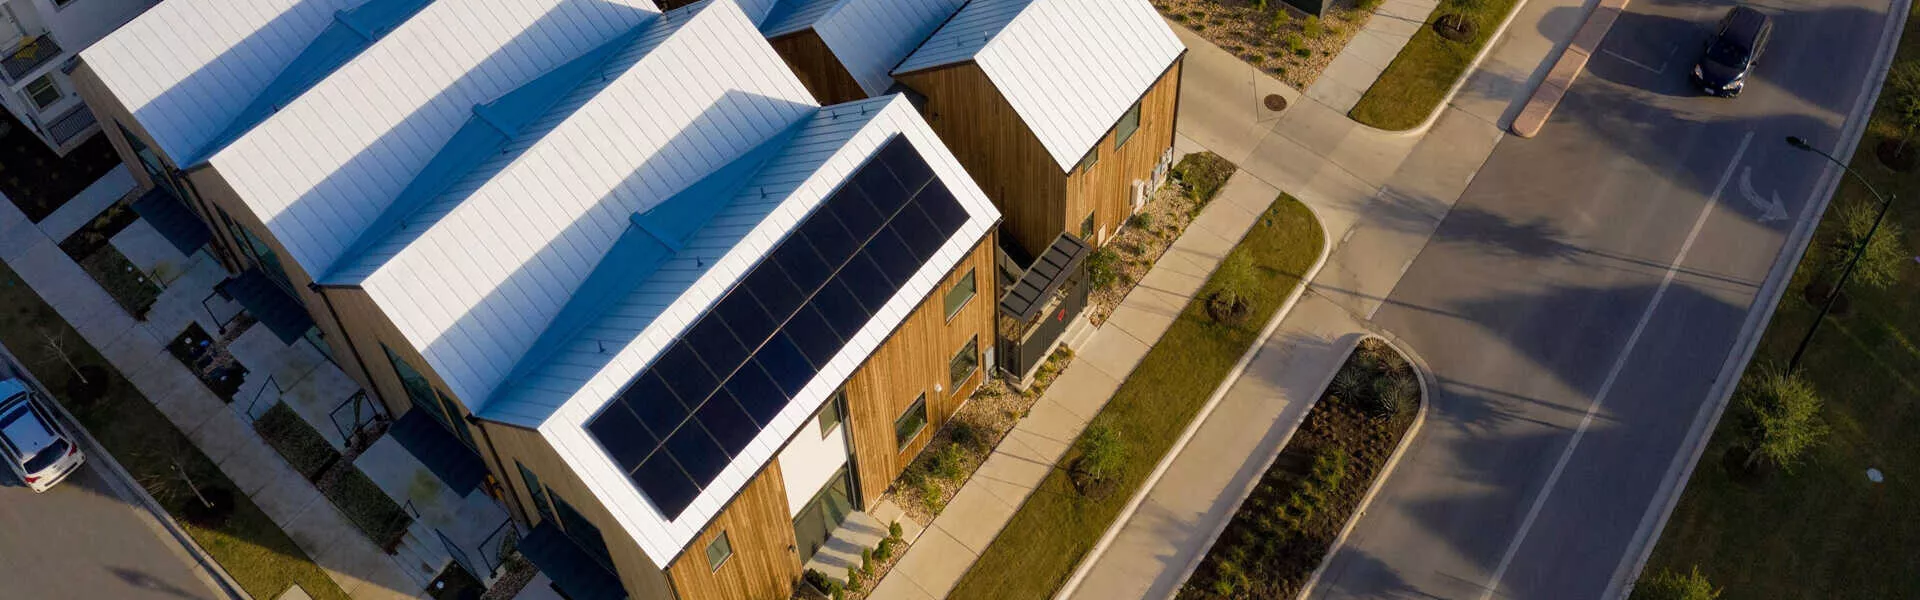 green construction using solar panels